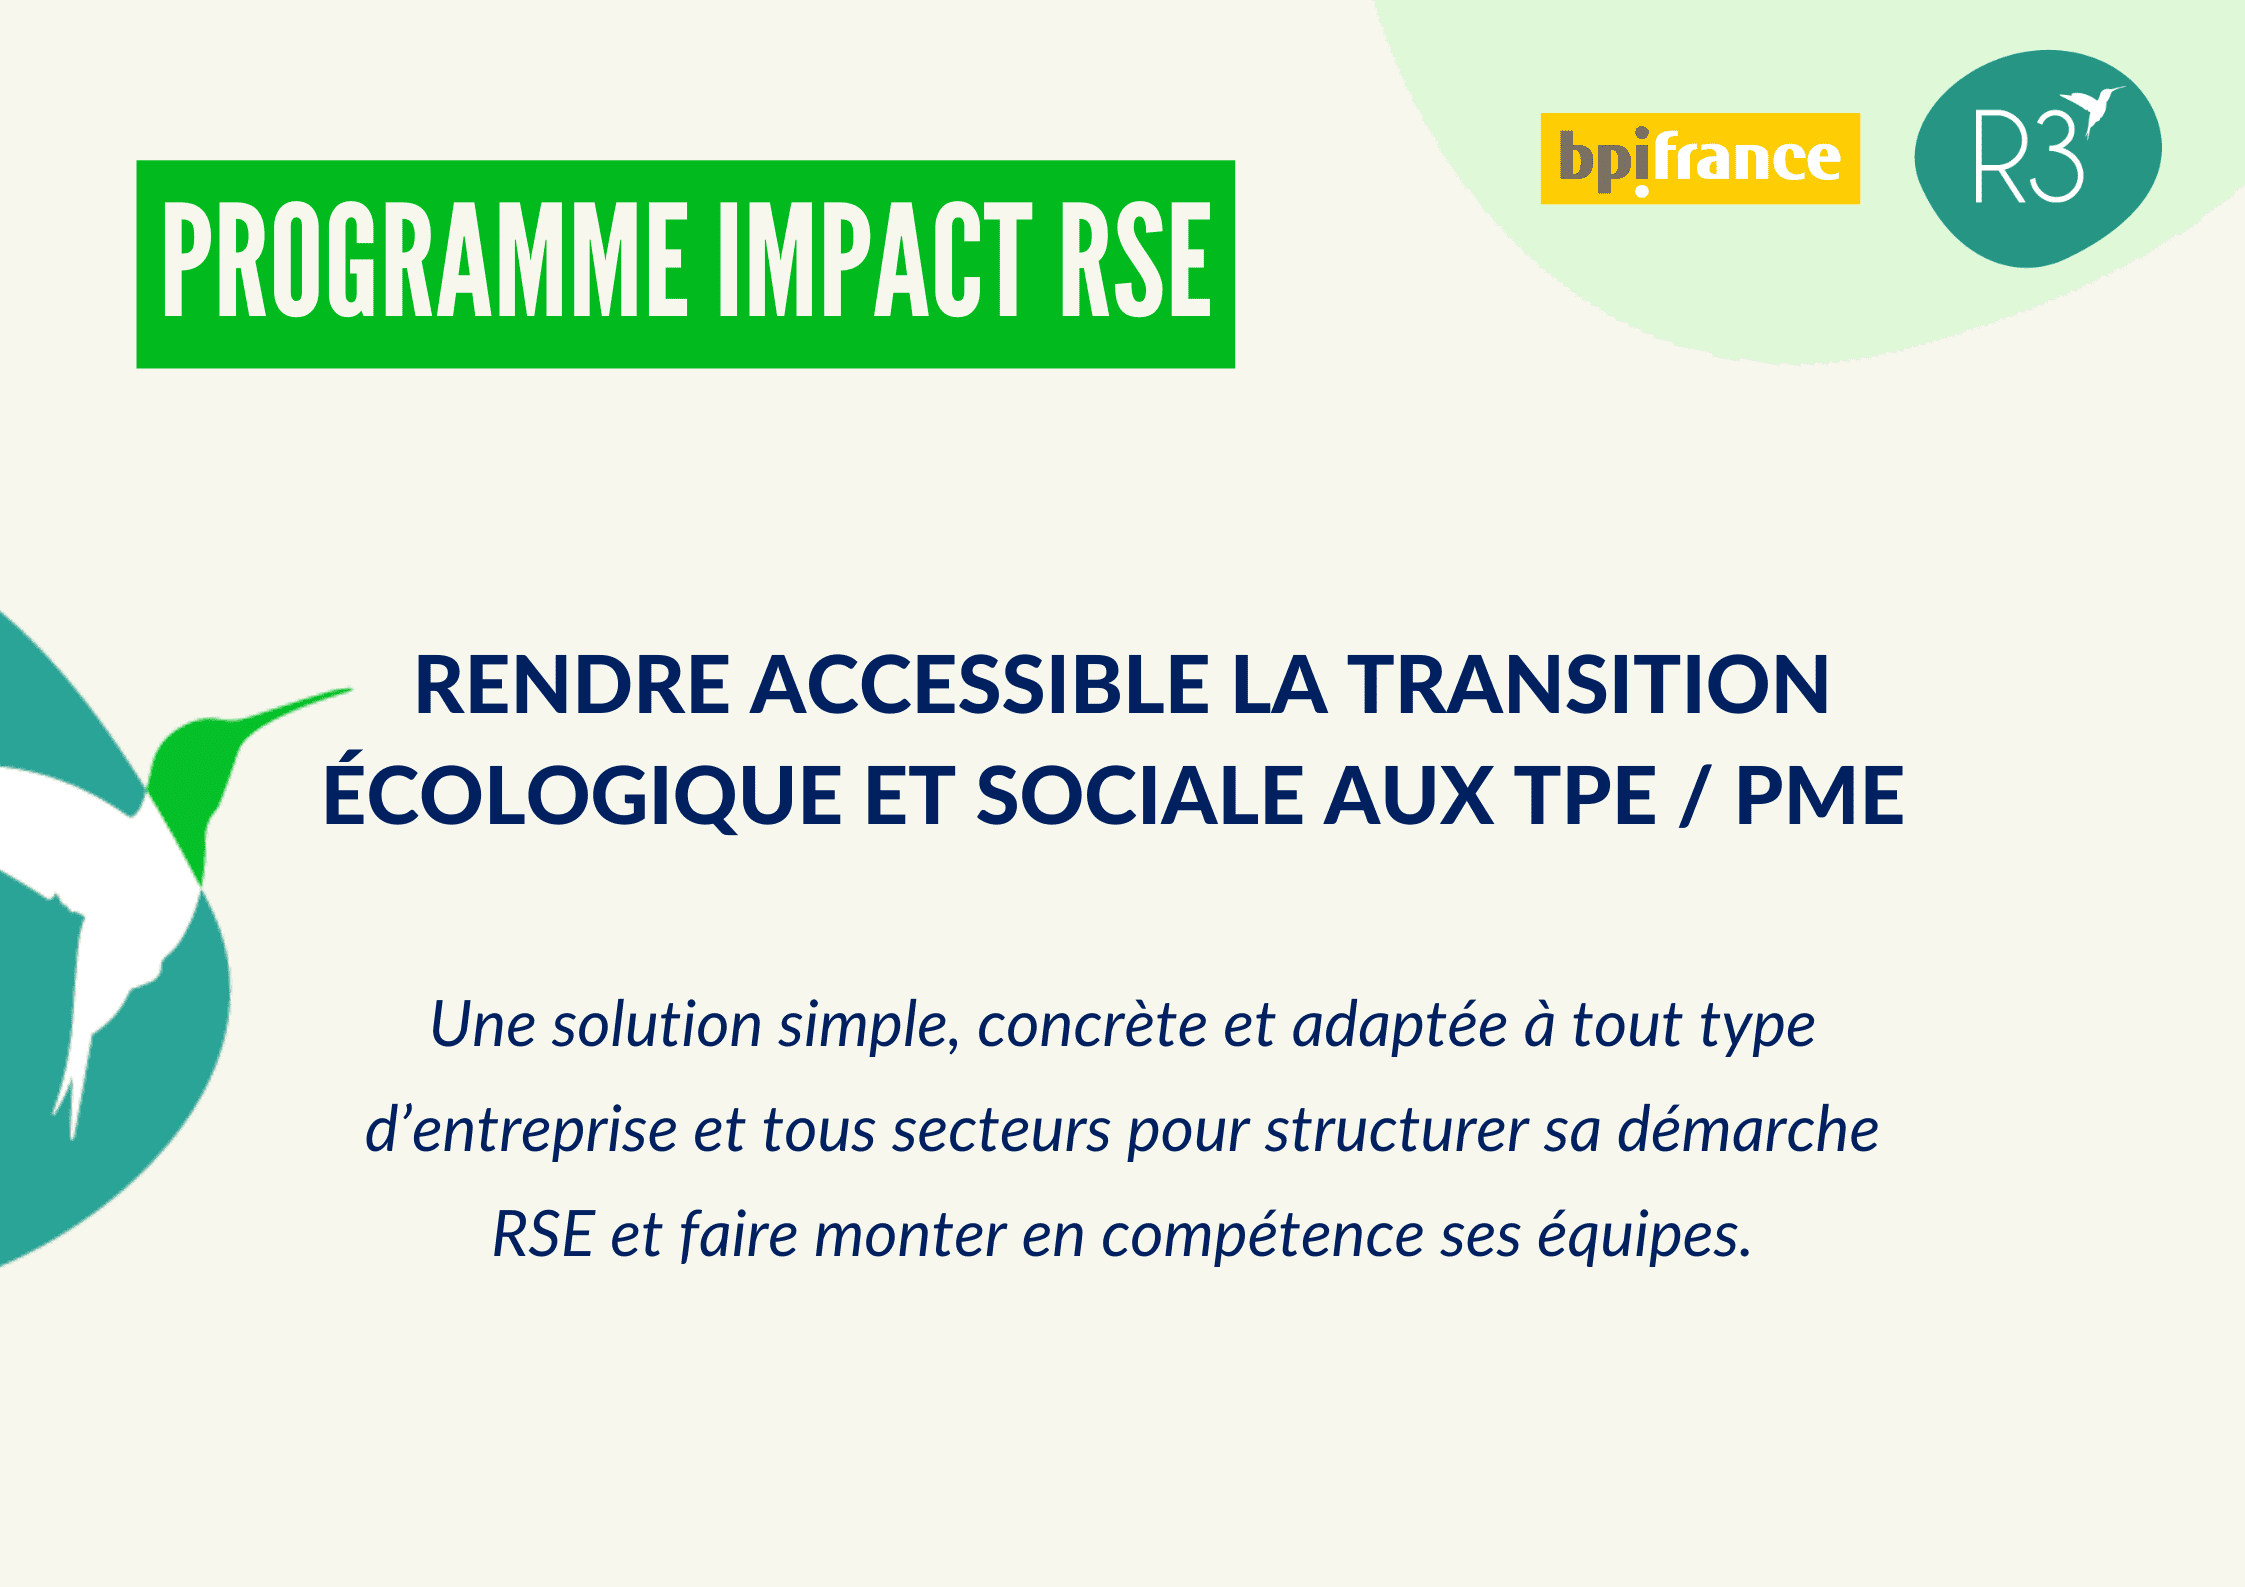 image ressource : Programme Impact RSE